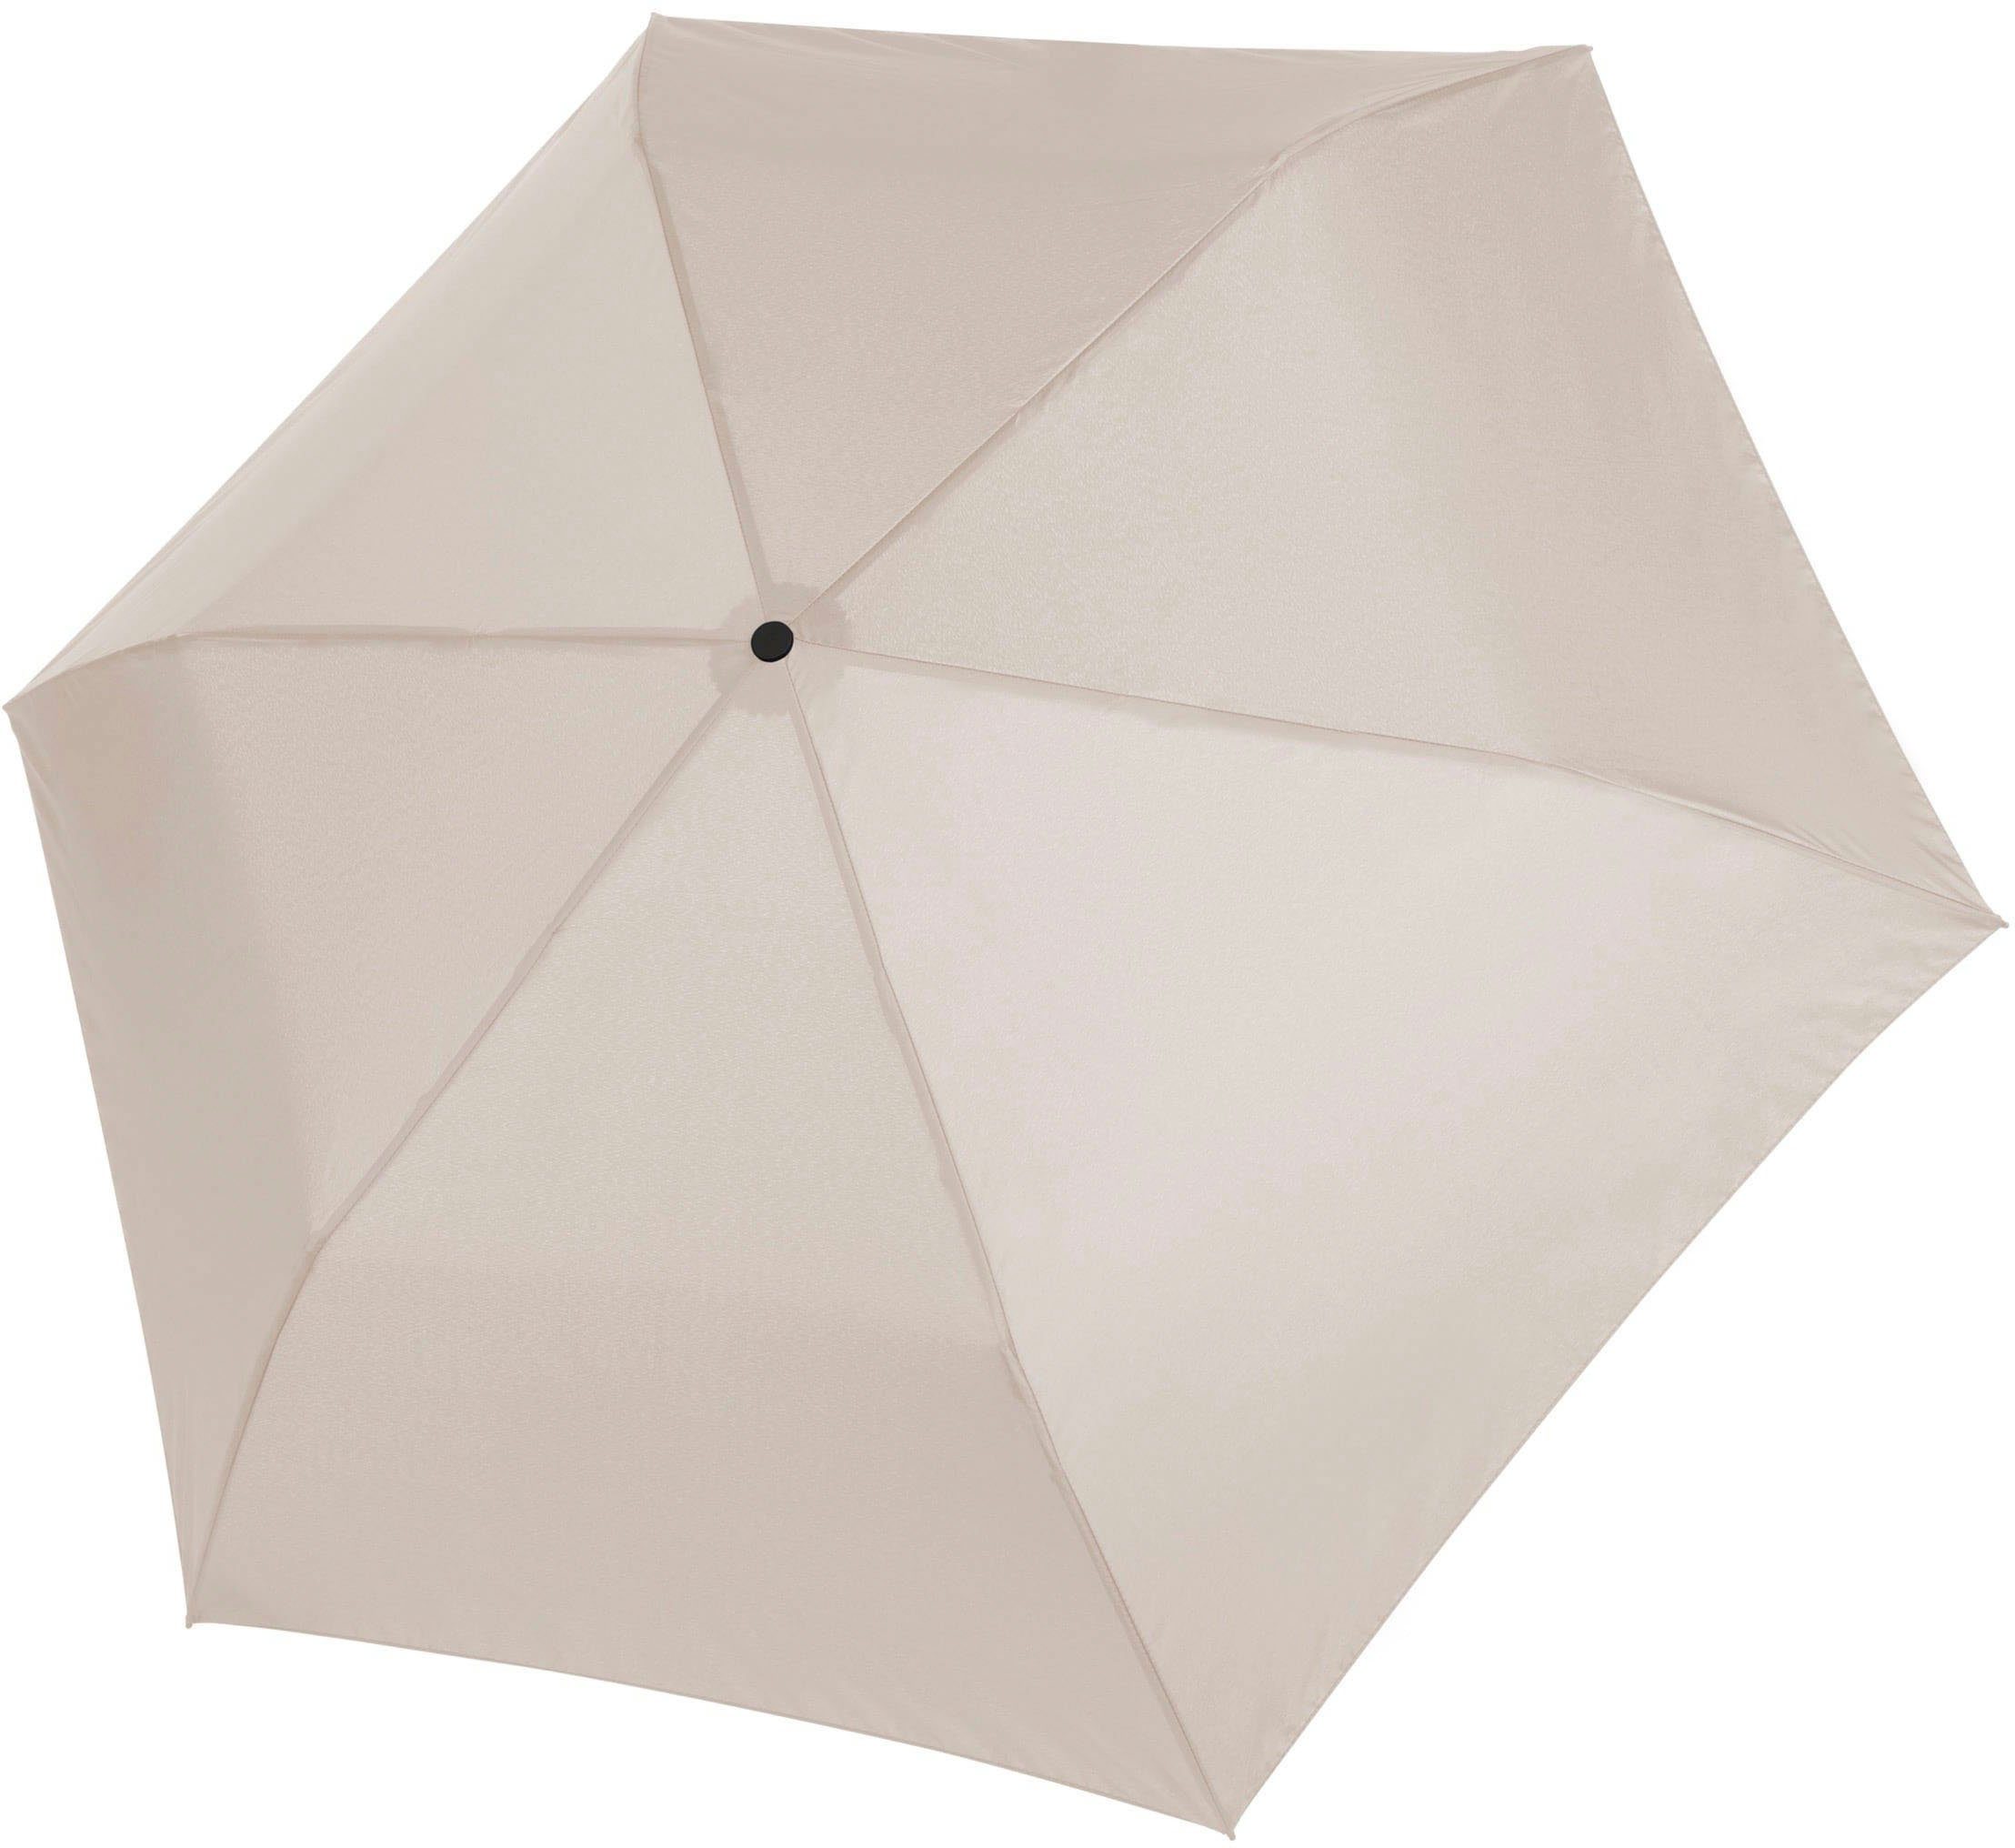 Taschenregenschirm beige uni, Magic doppler® harmonic zero